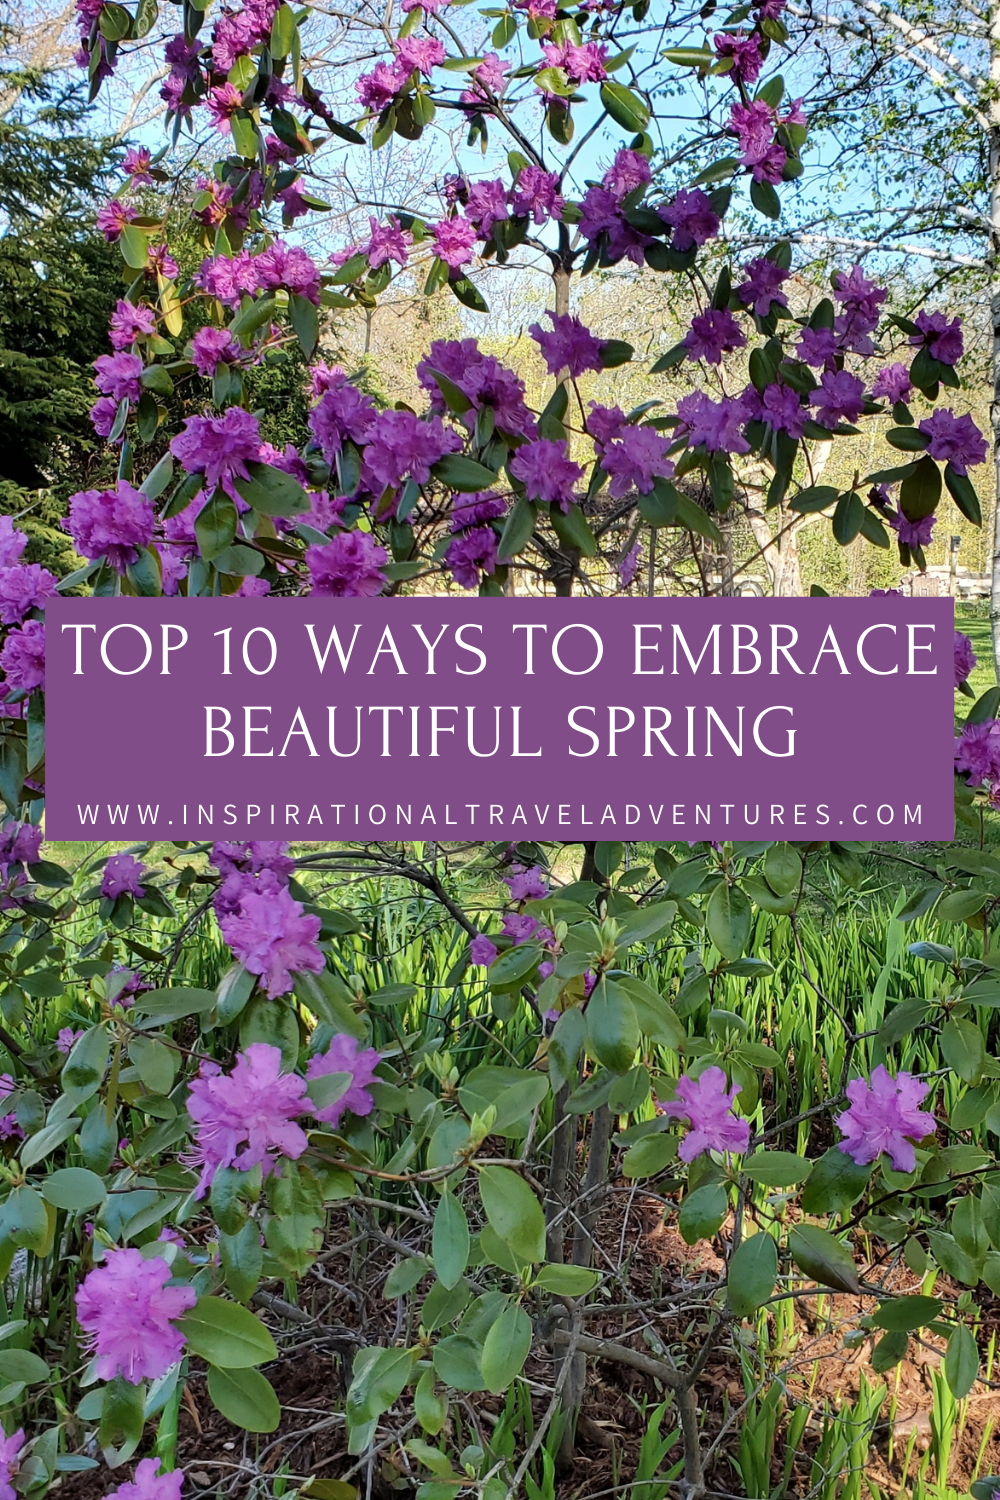 TOP 10 WAYS TO EMBRACE BEAUTIFUL SPRING